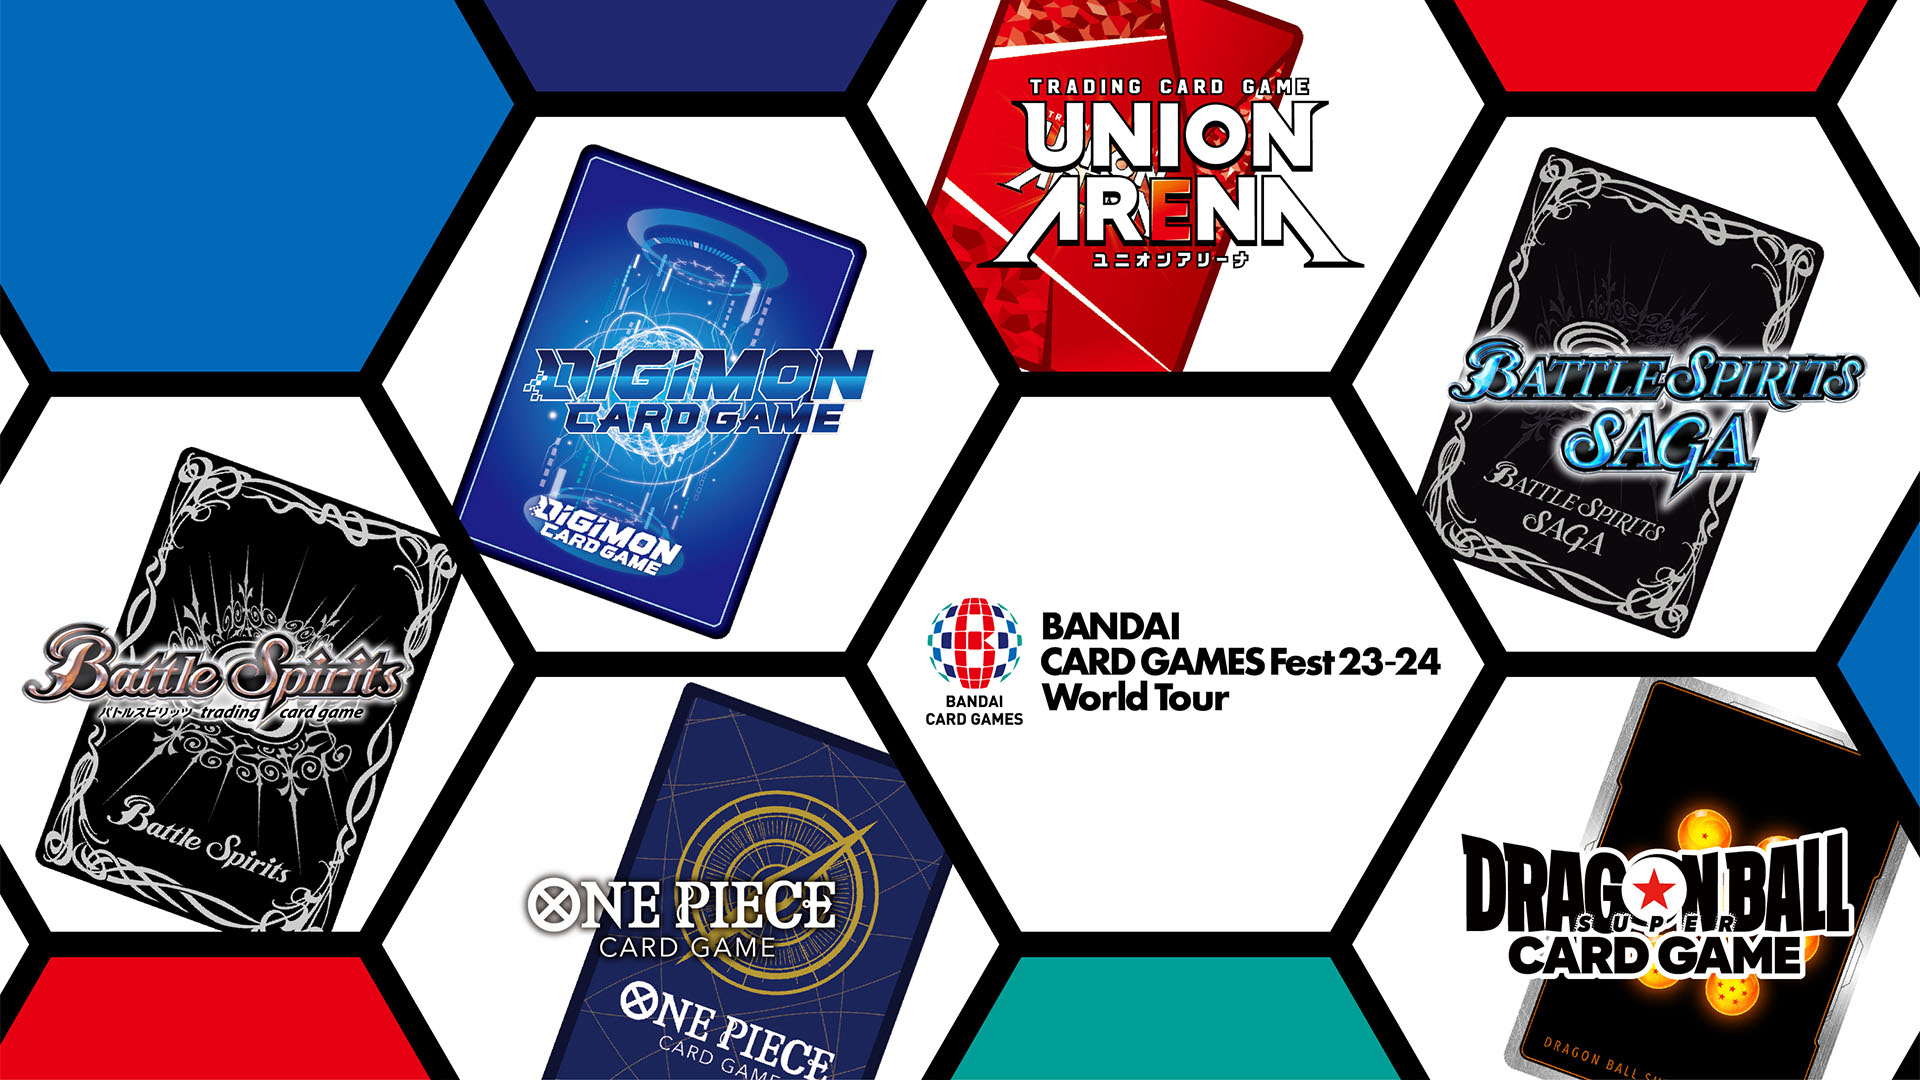 BANDAI CARD GAMES Fest. 23-24 World Tour Official Website